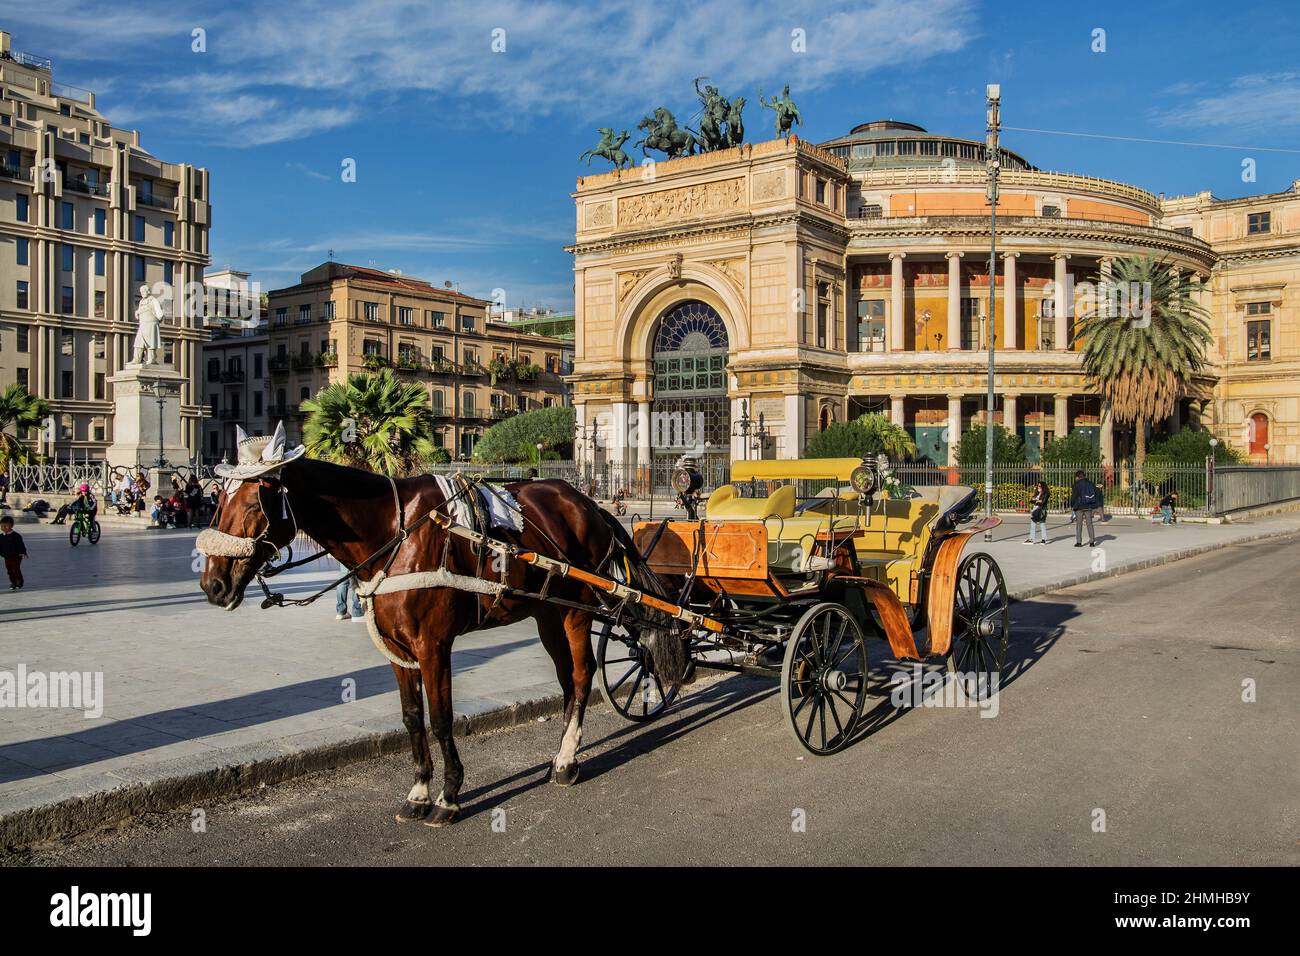 Carruaje tirado por caballos frente al teatro Politeama Garibaldi en Piazza Ruggero Settimo, Palermo, Sicilia, Italia Foto de stock